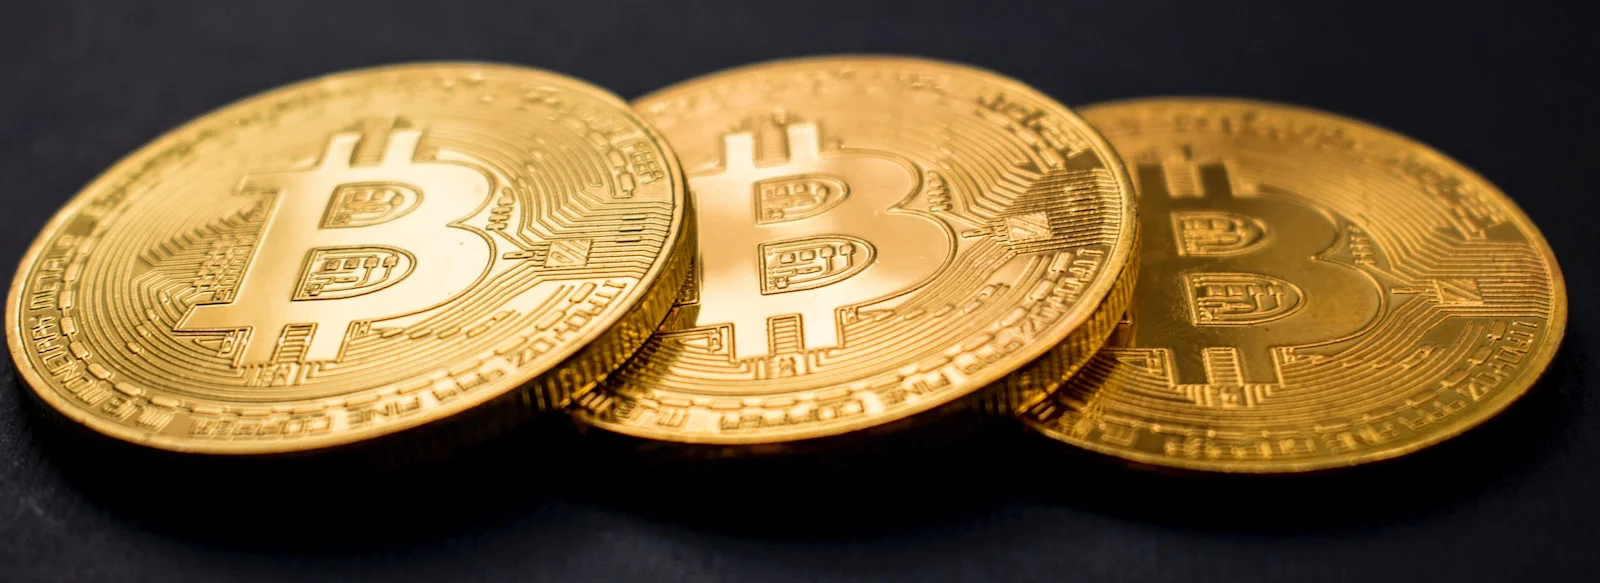 Who has highest bitcoins